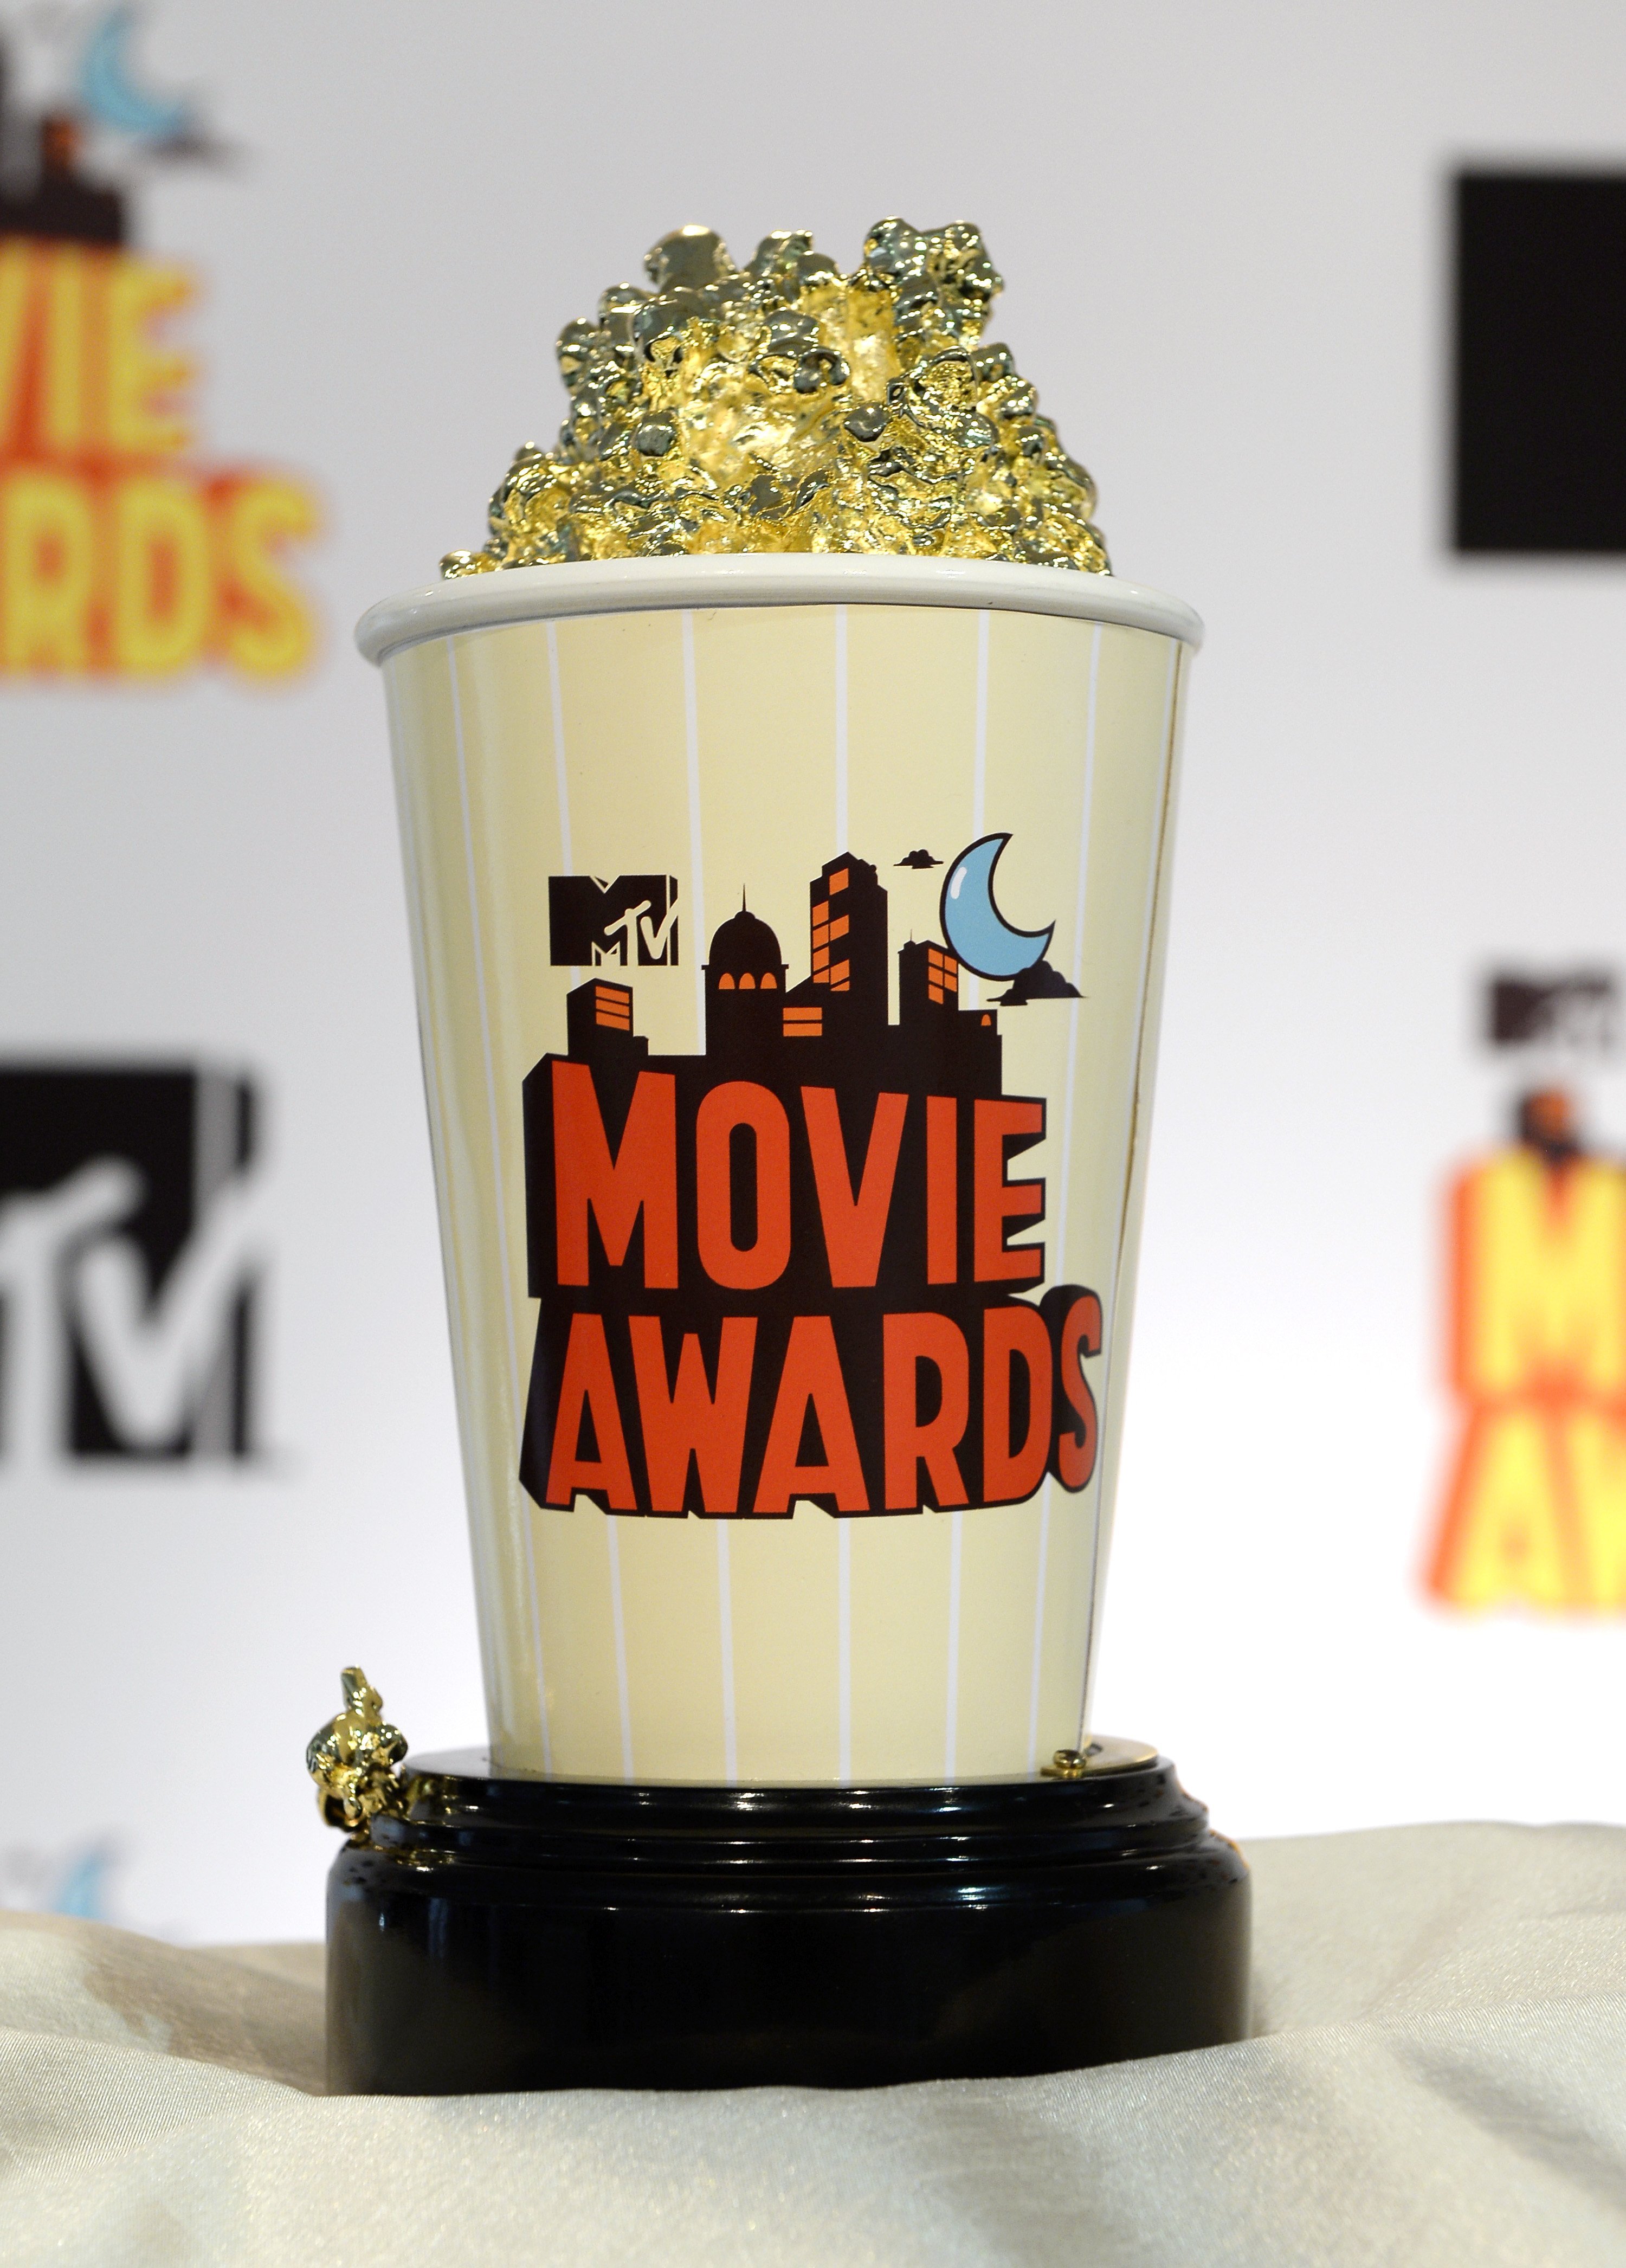 The 2015 MTV Movie Awards Golden Popcorn trophy is displayed during an MTV Movie Awards press junket April 9, 2015, in Los Angeles